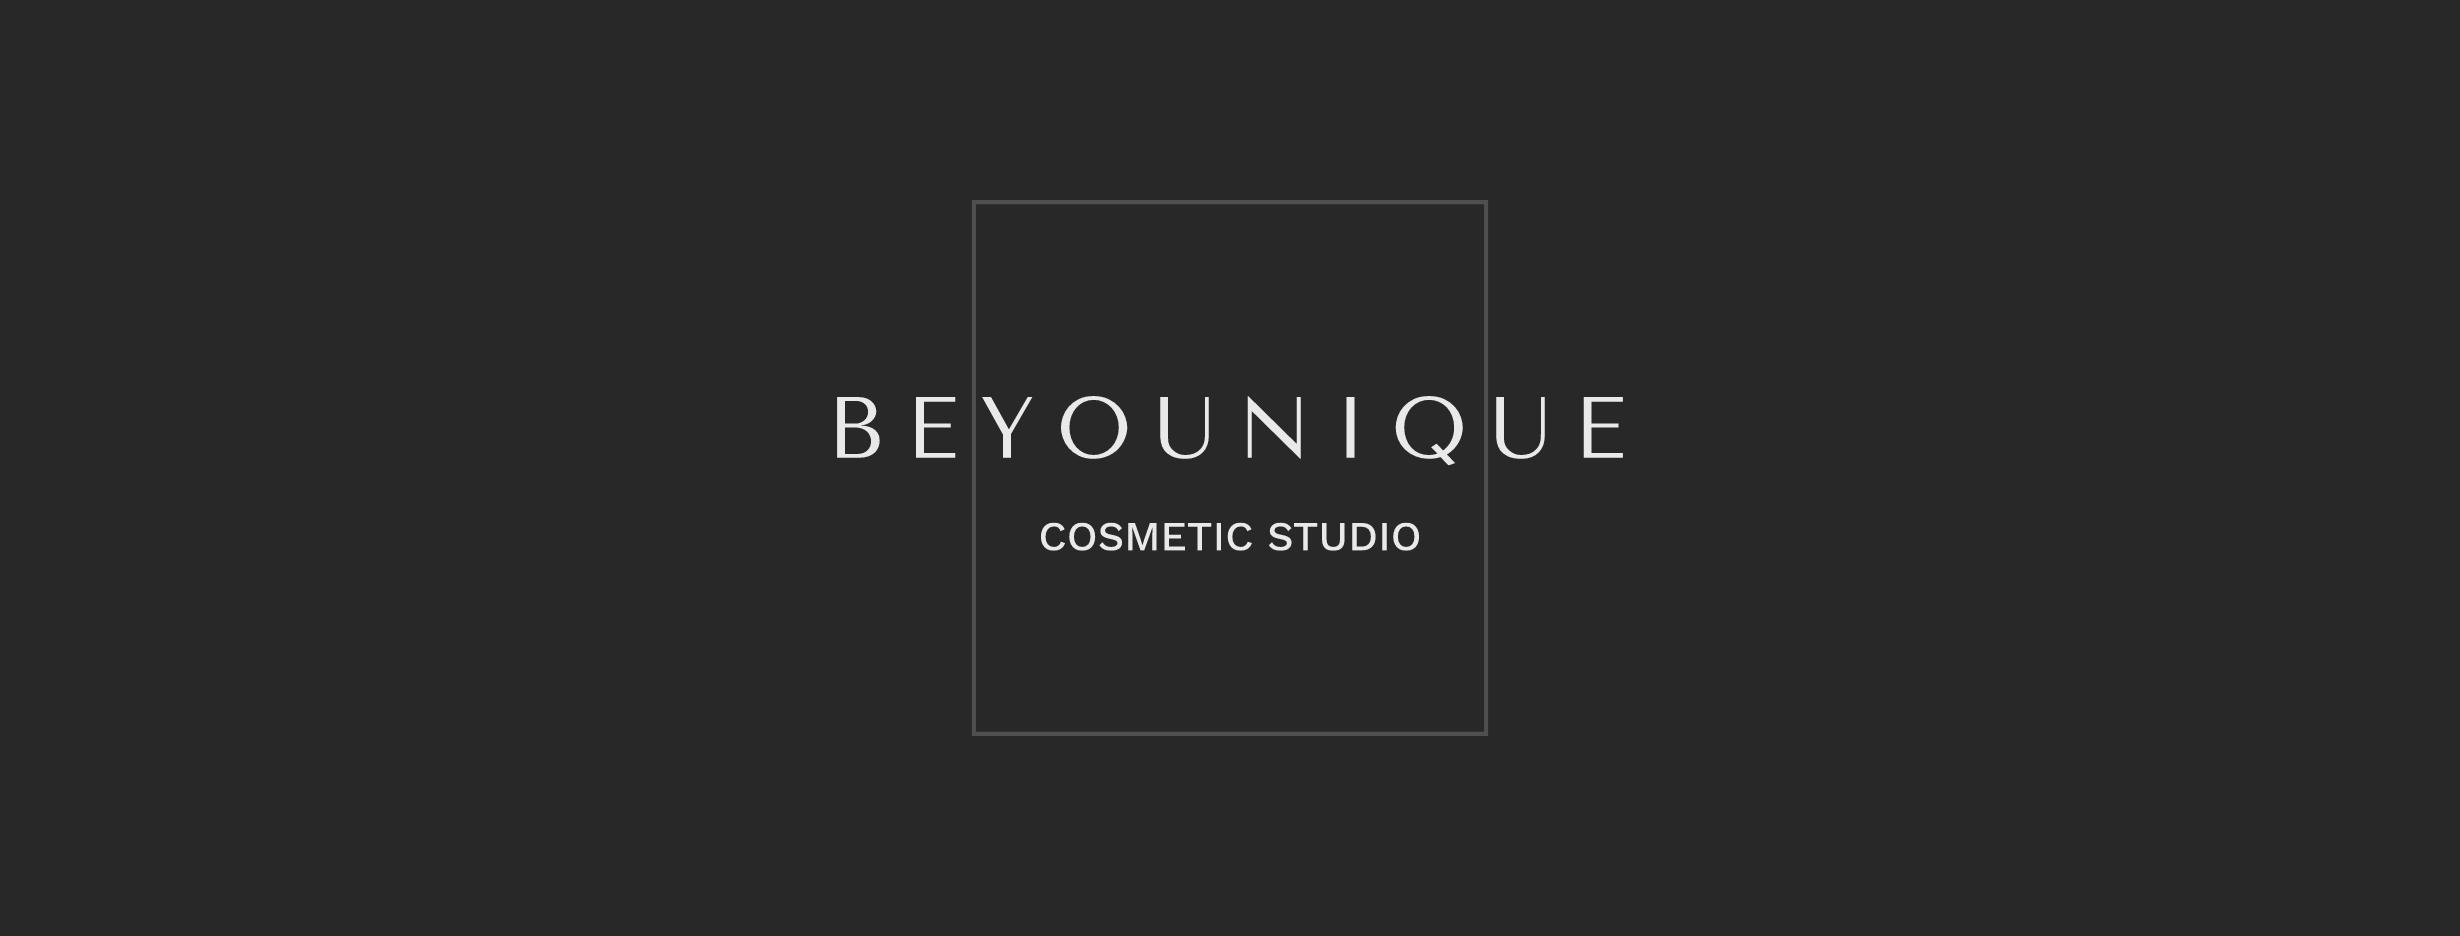 BEYOUNIQUE  Cosmetic Studio